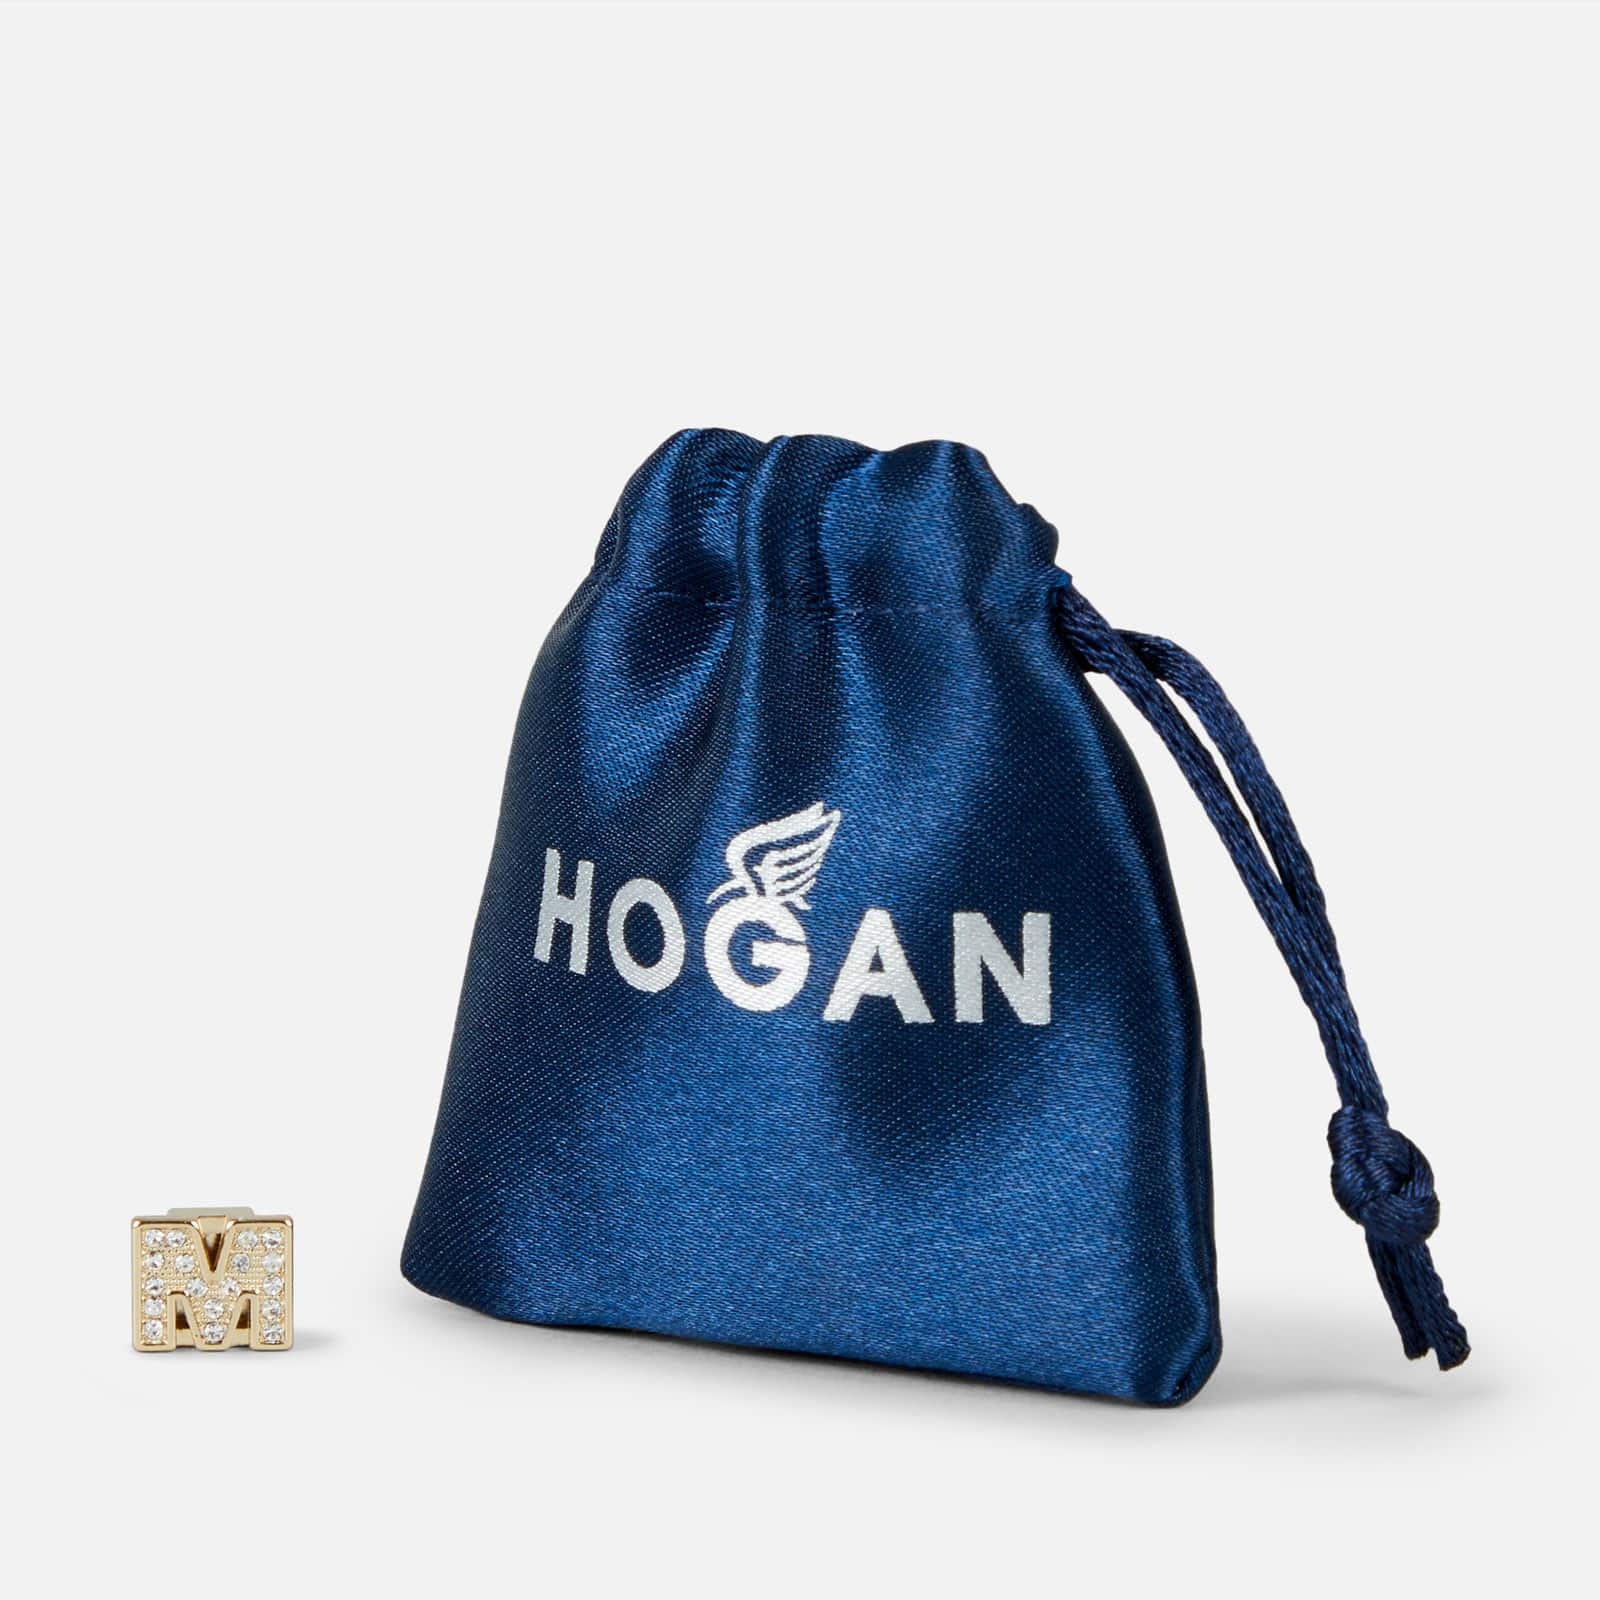 Hogan By You - Shoelace Bead Violet Gold Light Blue - 2